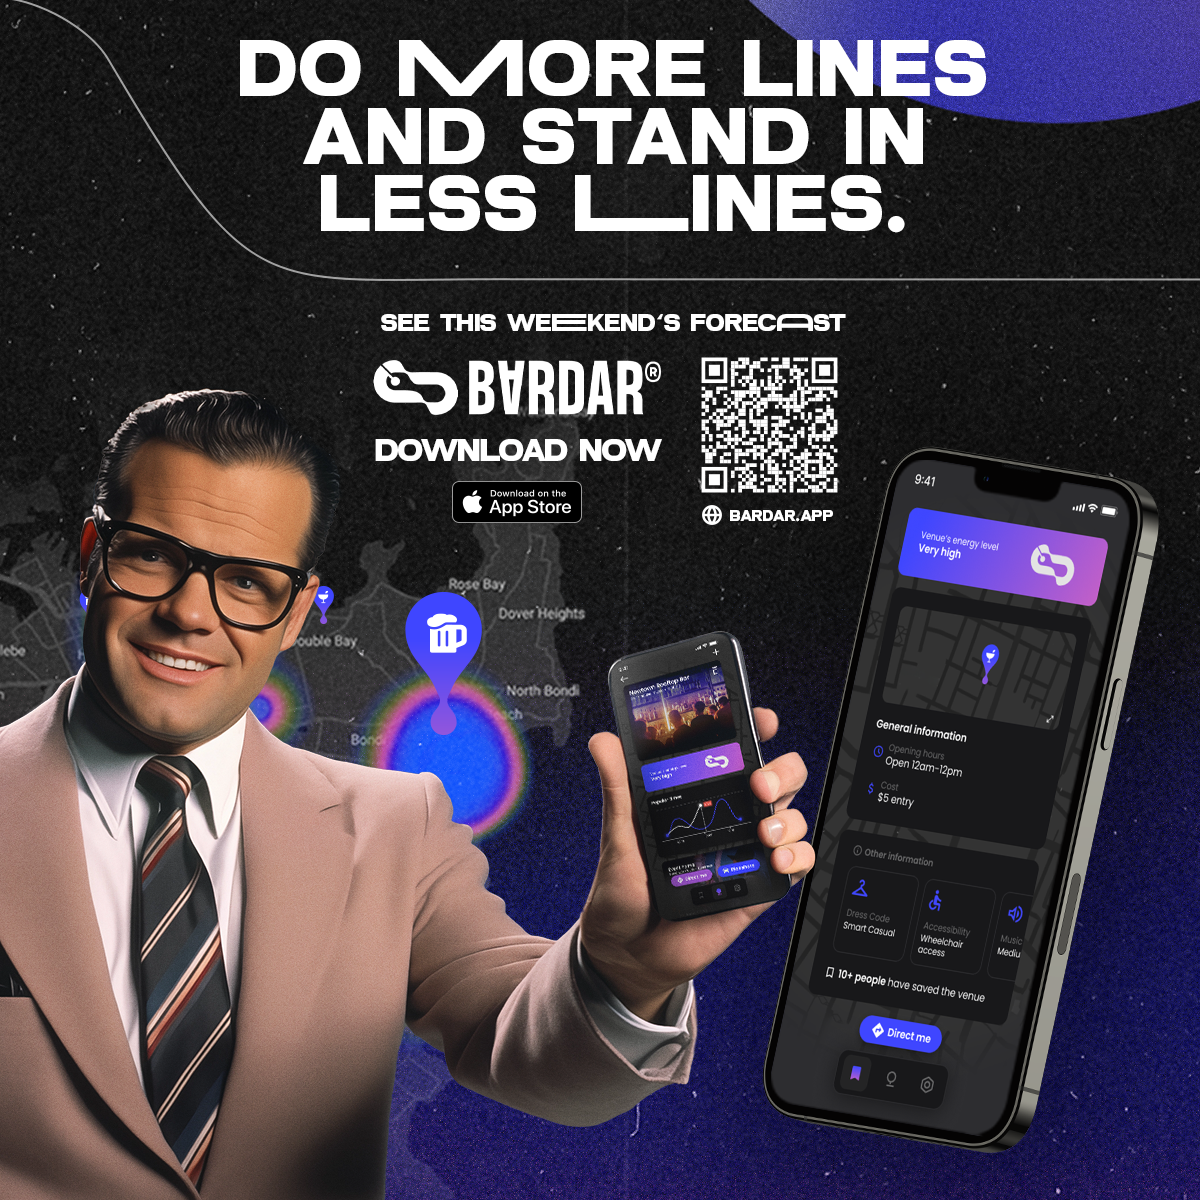 Bardar campaign & app now live